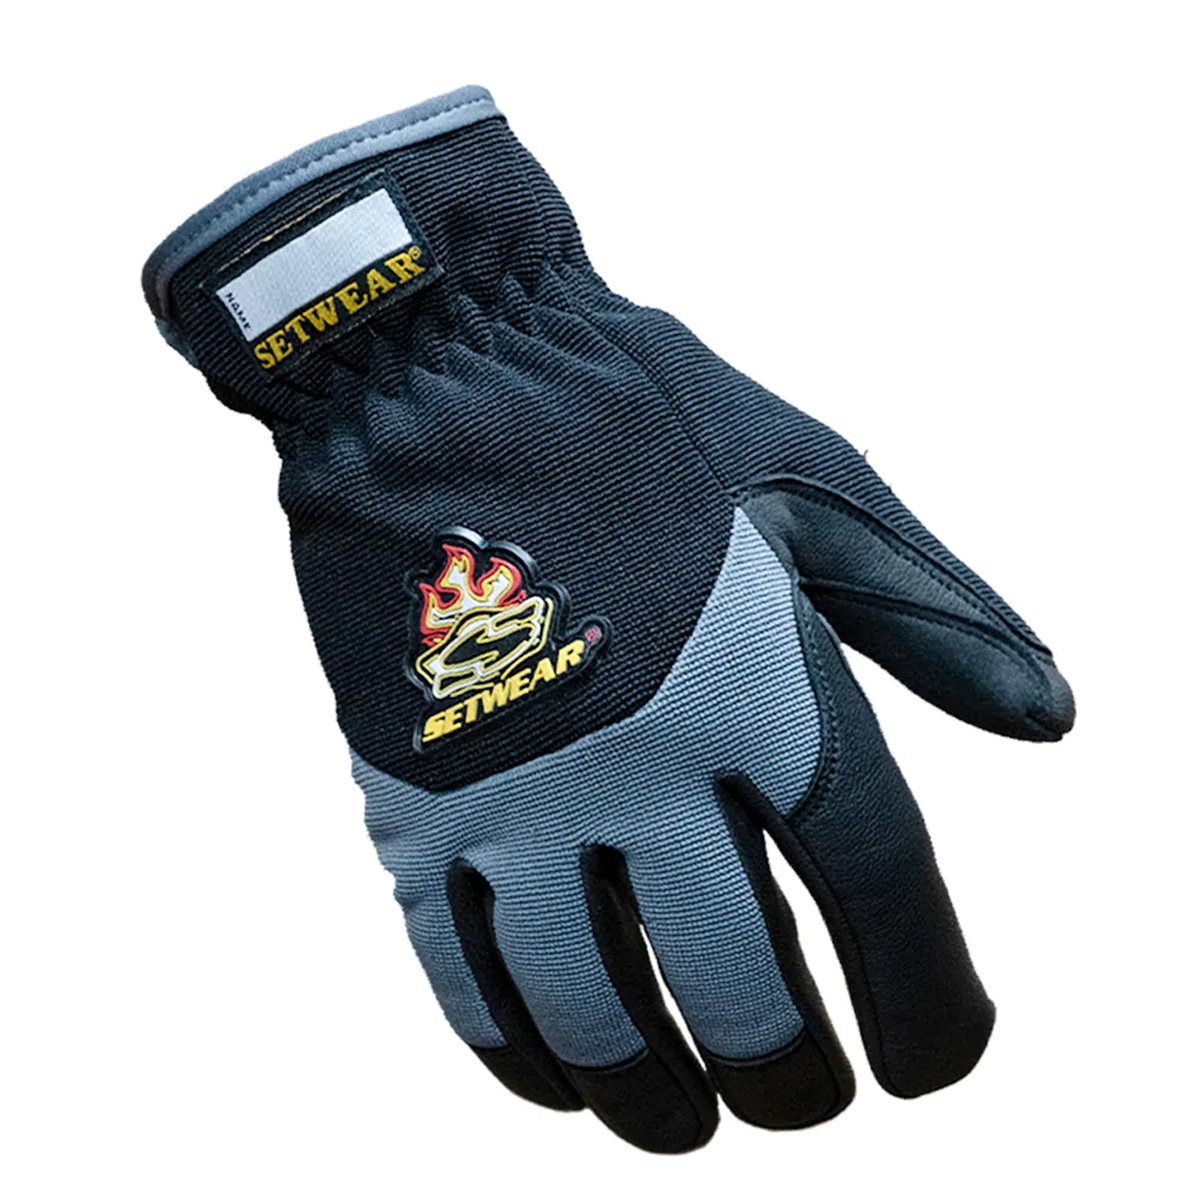 Setwear EZ-Fit Extreme Handschuhe